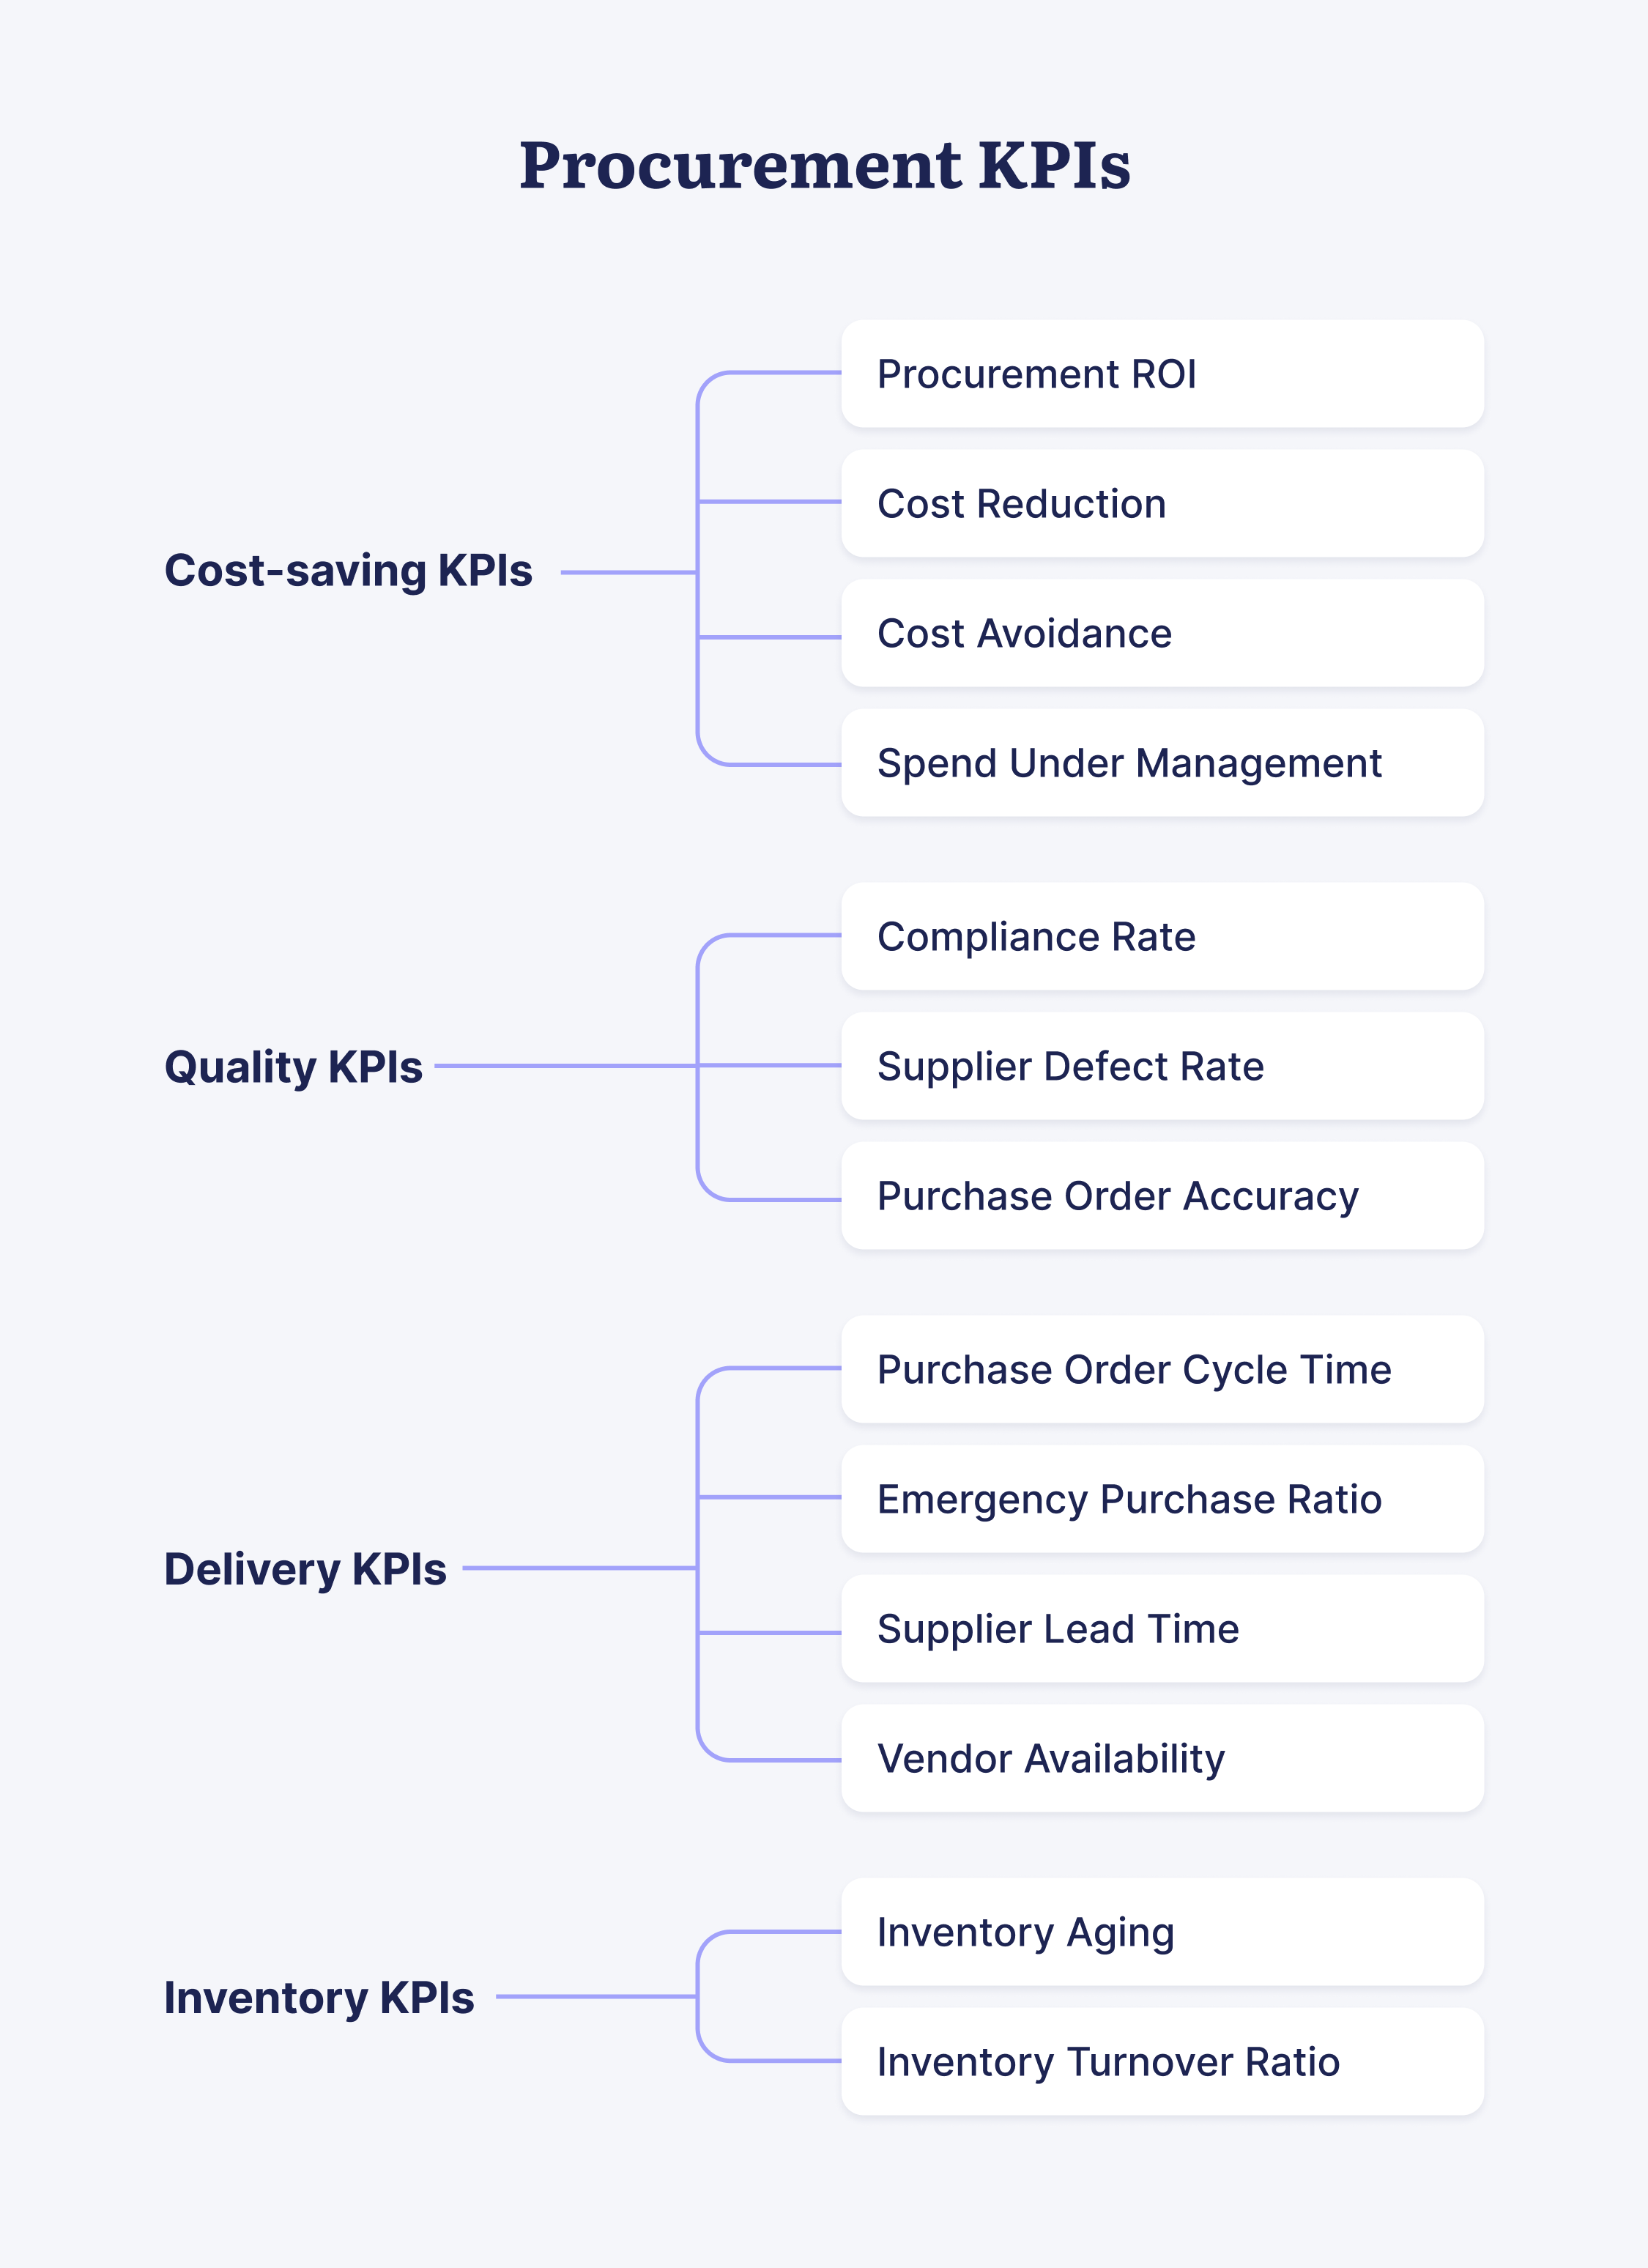 procurement kpi categories